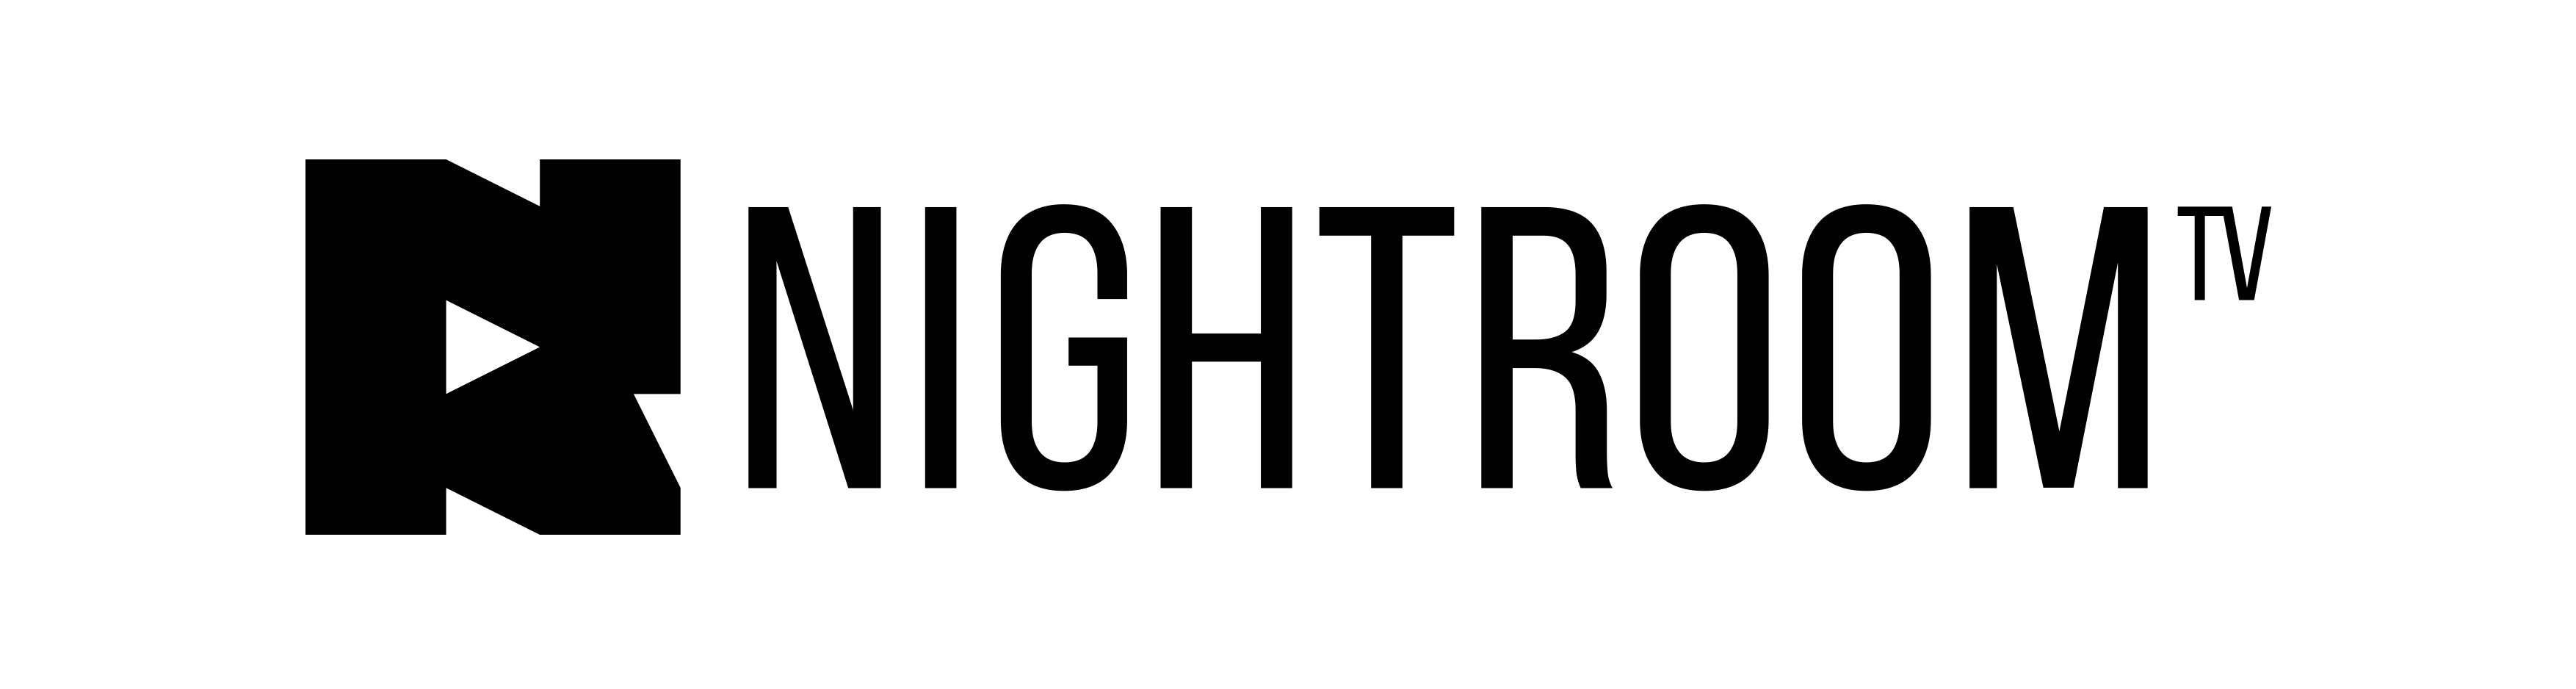 Logotipo-Nighroom-horizontal-negro-estrecho (1)